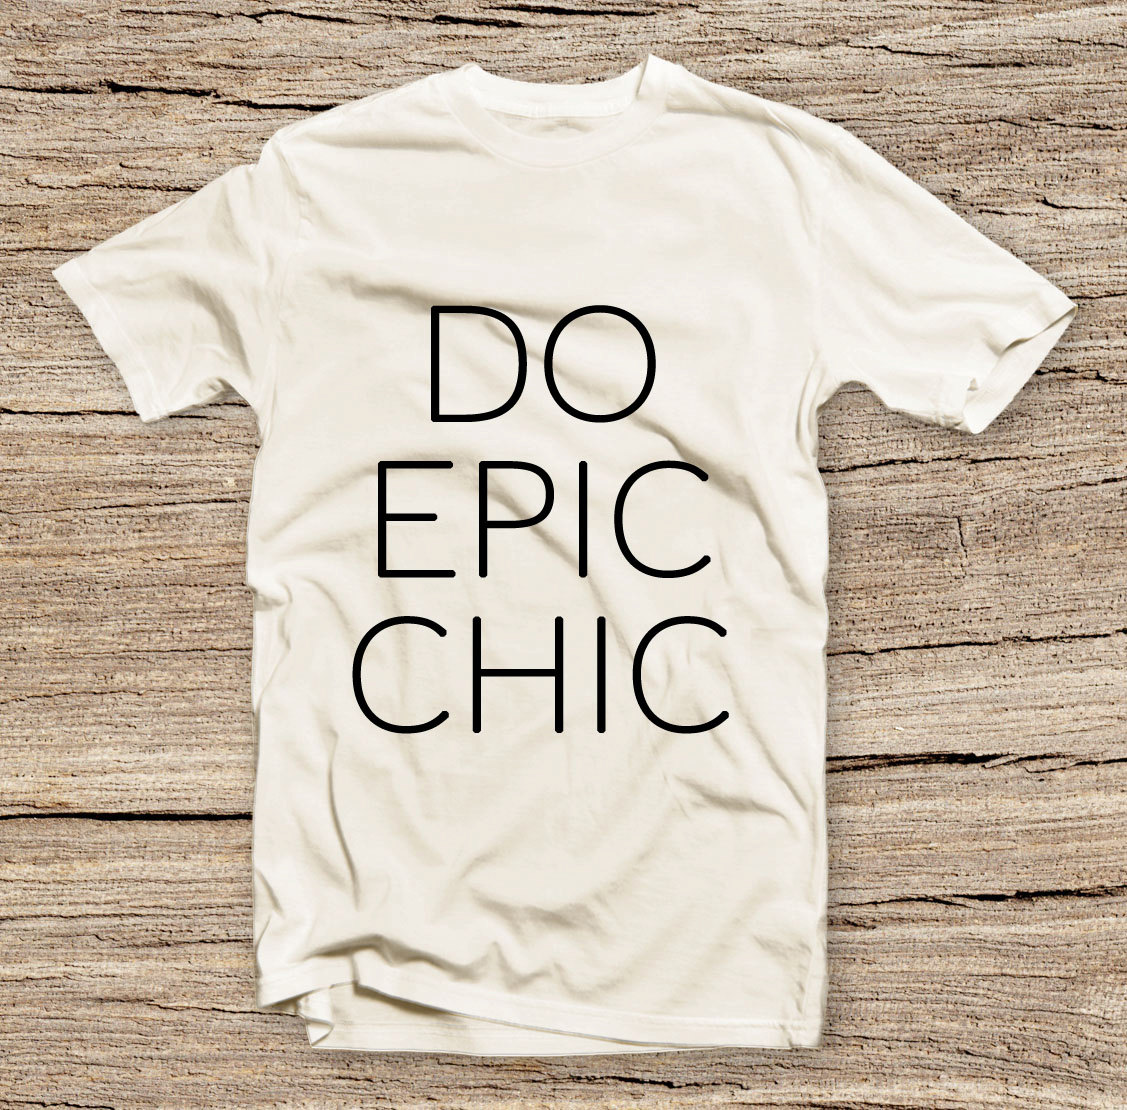 Pts-105 Do Epic Chic Style T-shirt, Fashion Printed T-shirt